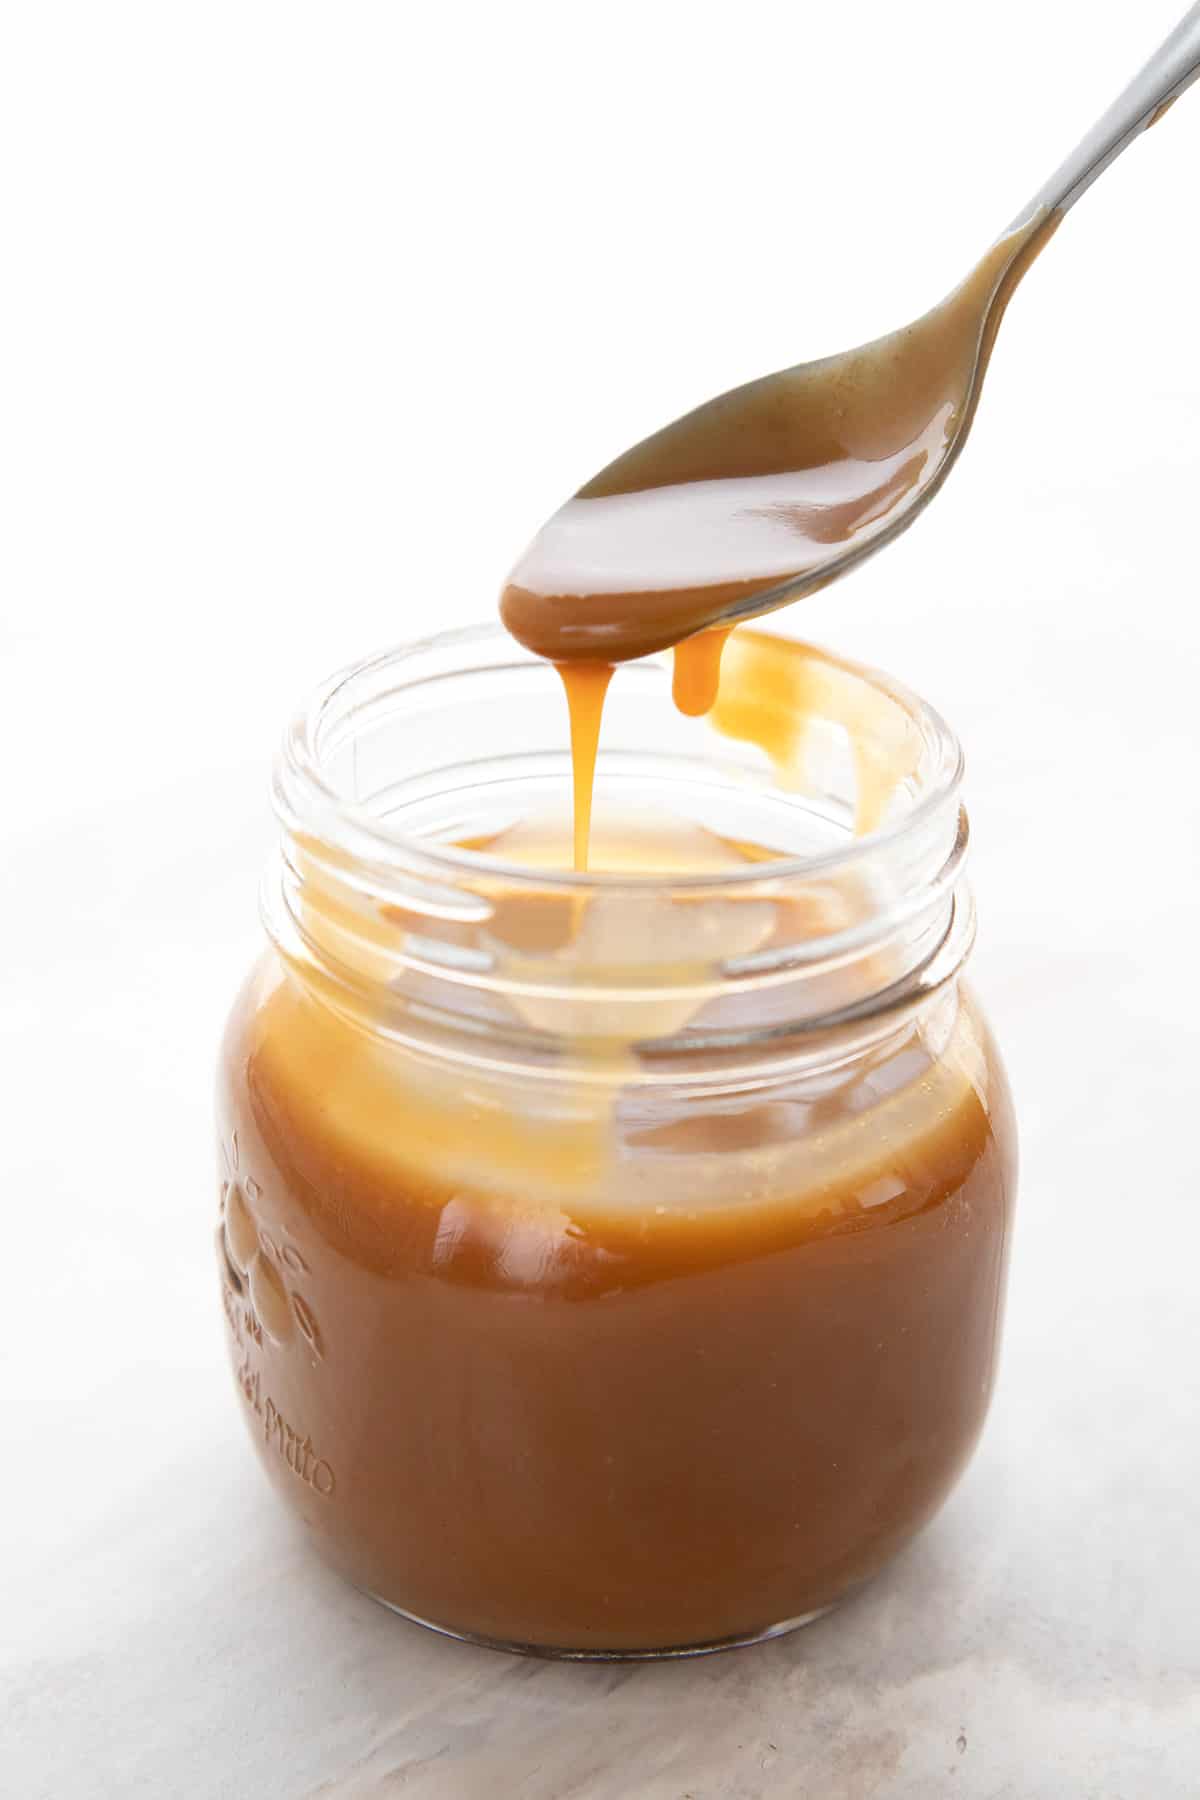 A spoon drizzling keto dulce de leche into a glass jar.